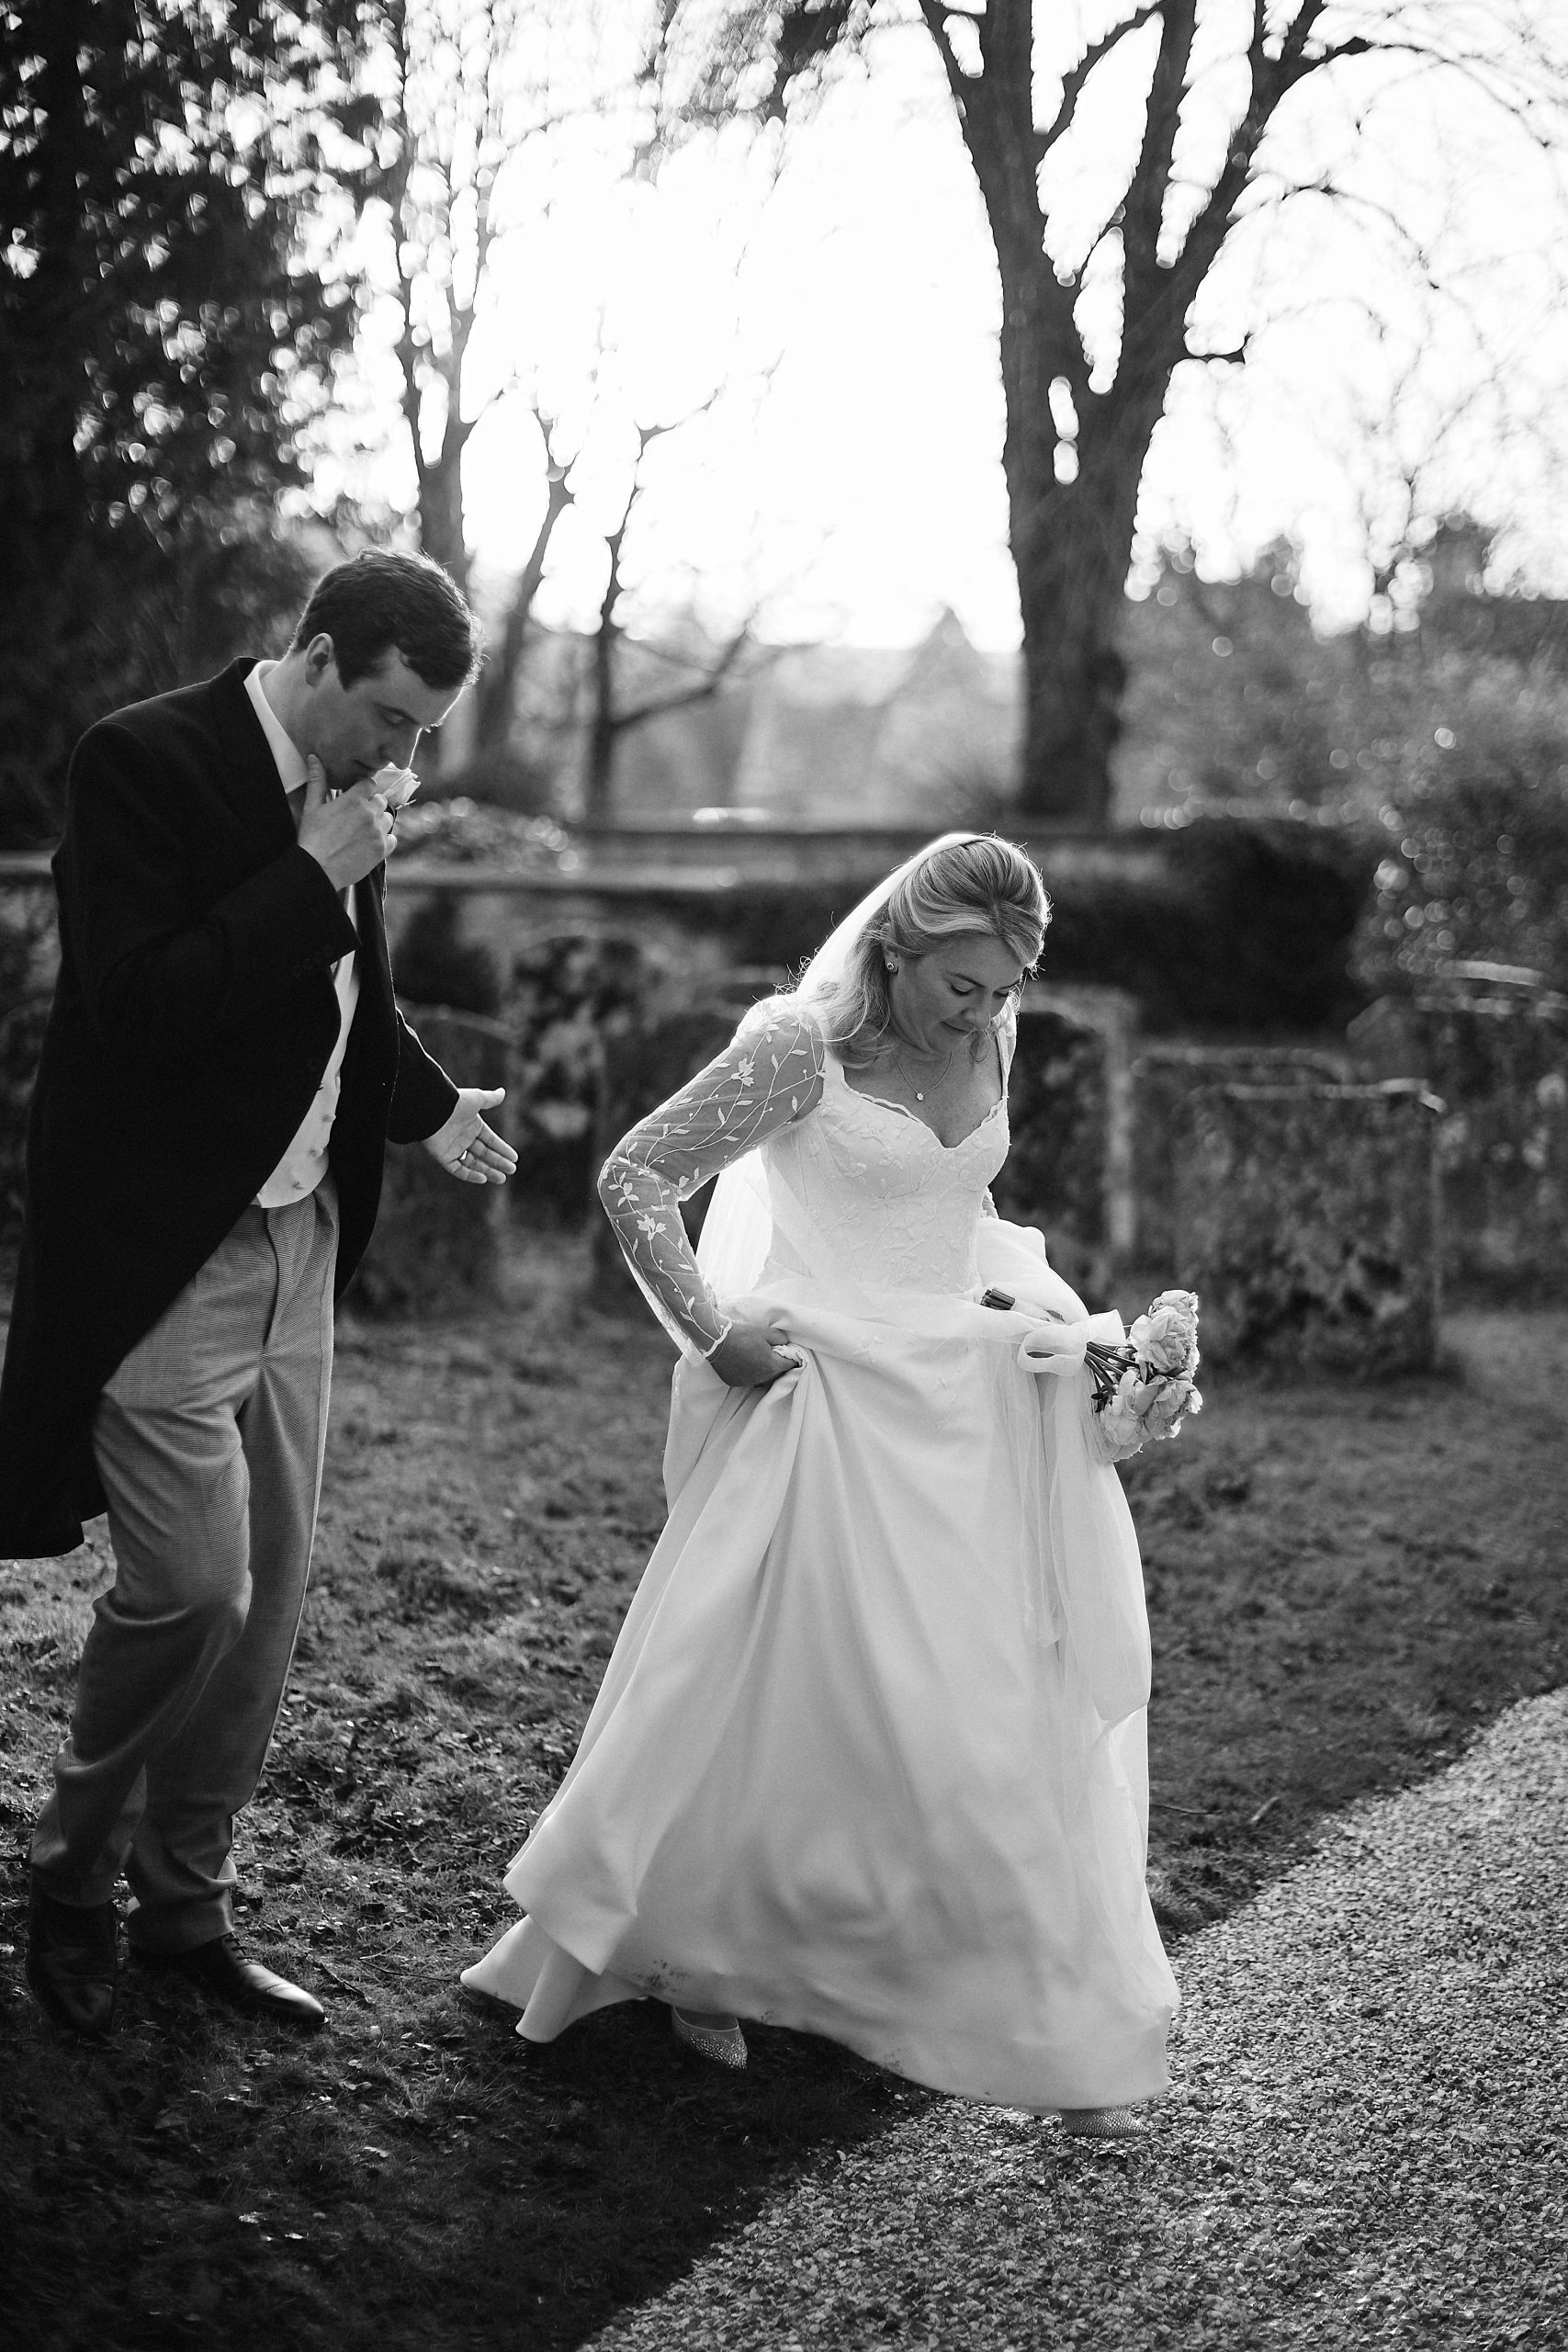 Contact Wedding Photographer The Springles